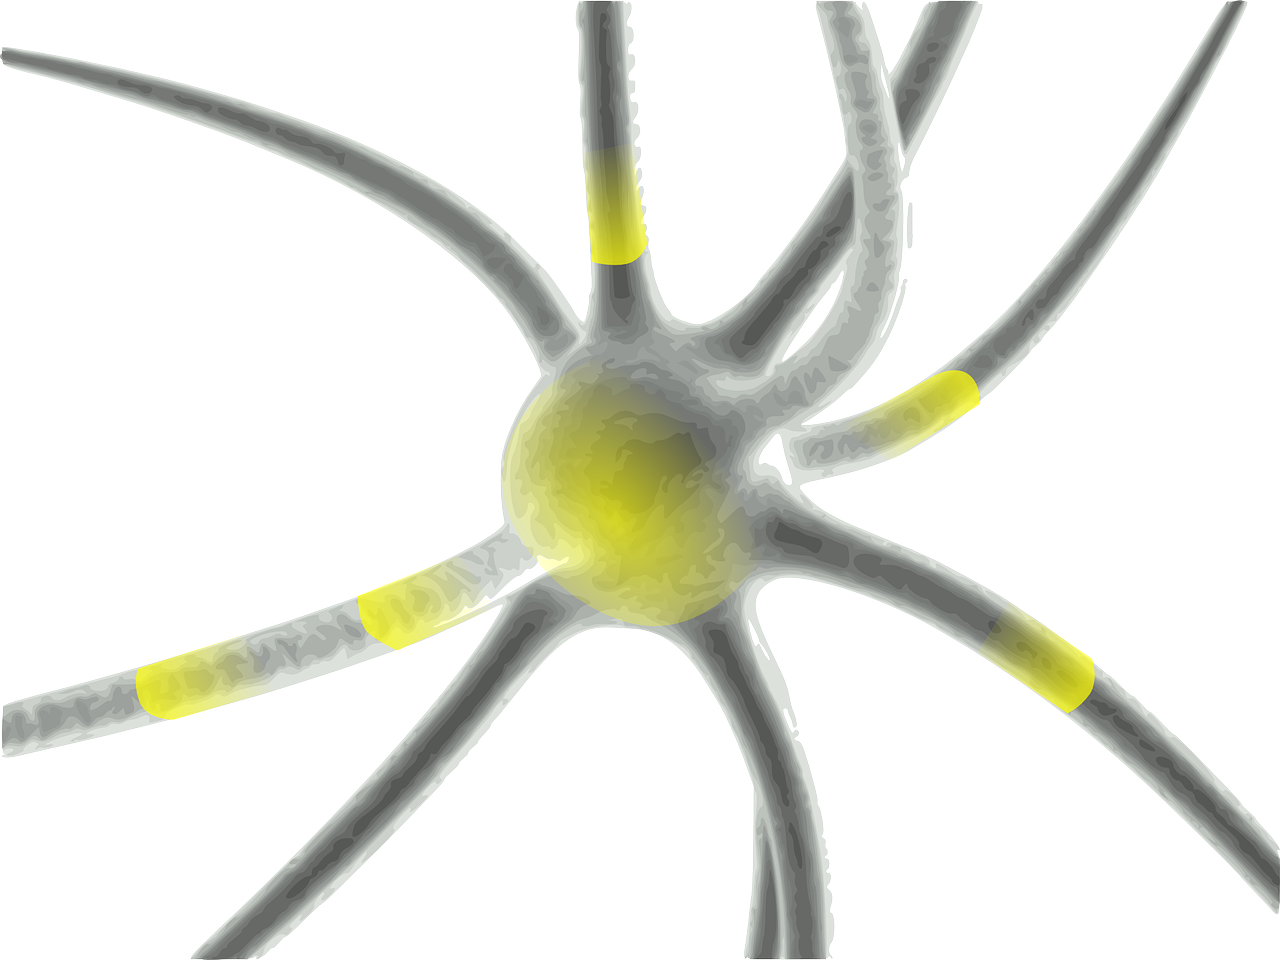 neuron synapse science free photo